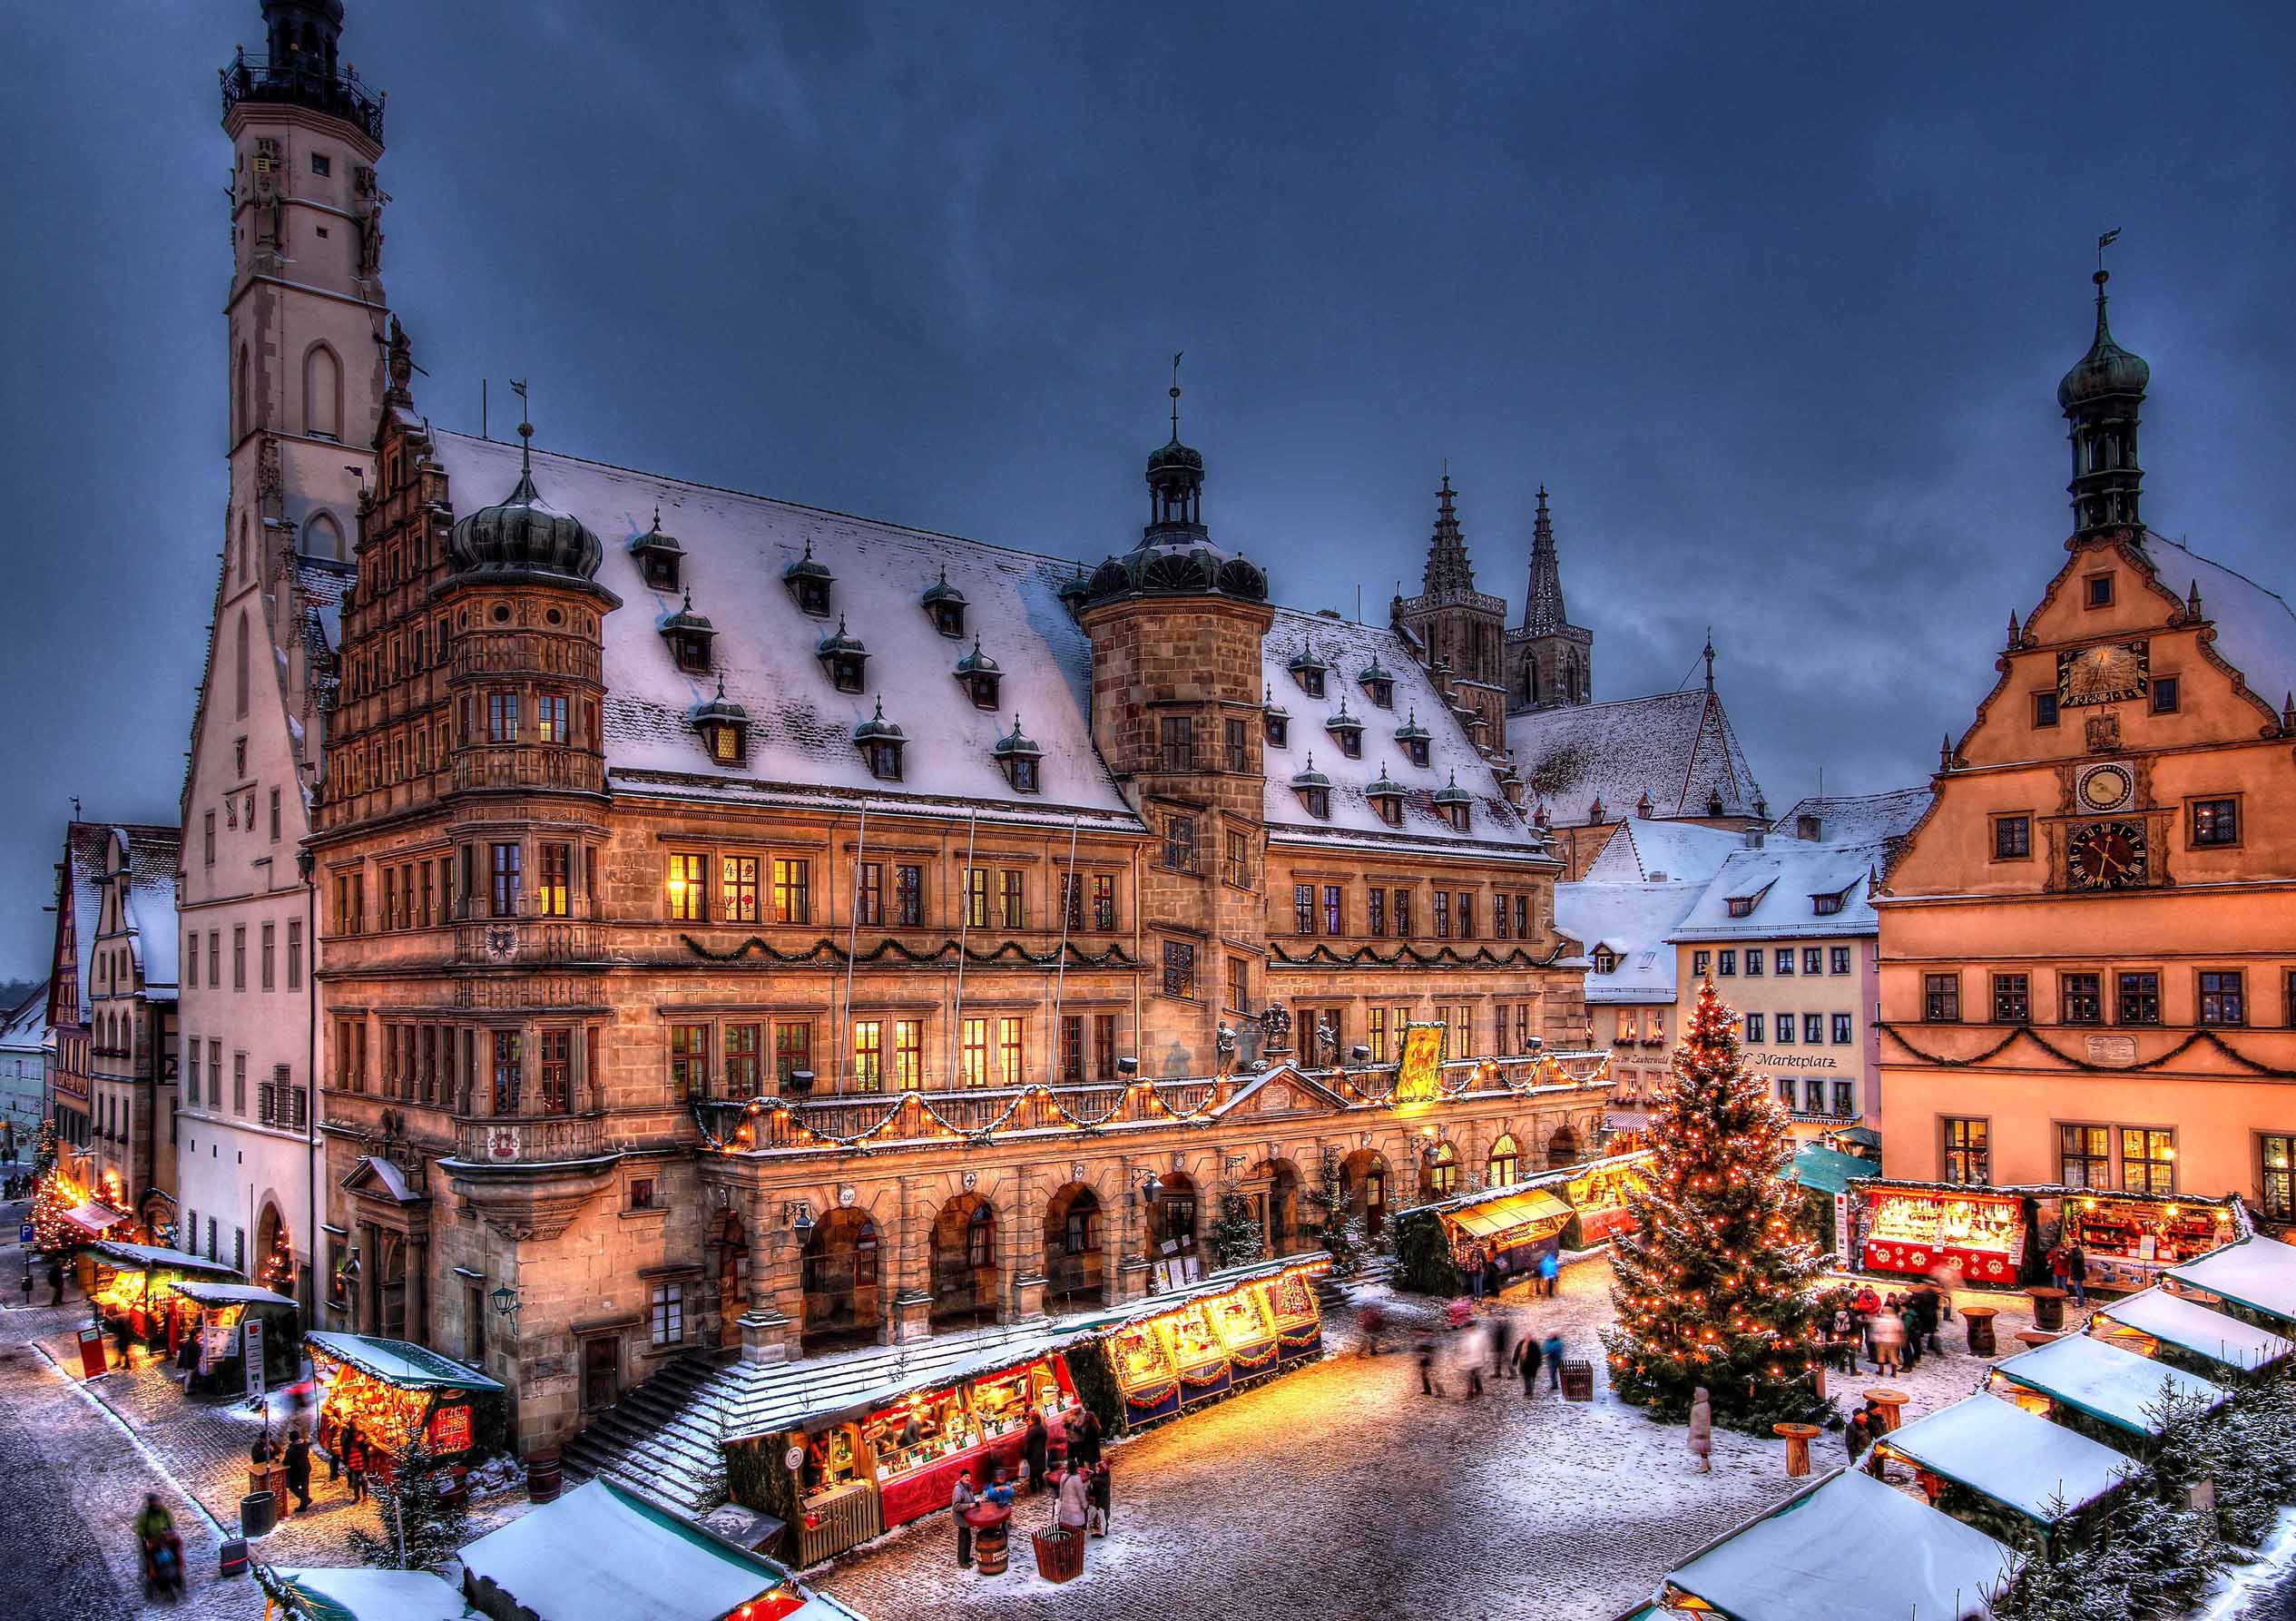 Awesome-Christmas-Markets-in-Europe-Reiterlesmarkt-Rothenburg-ob-der-Tauber-Germany.jpg